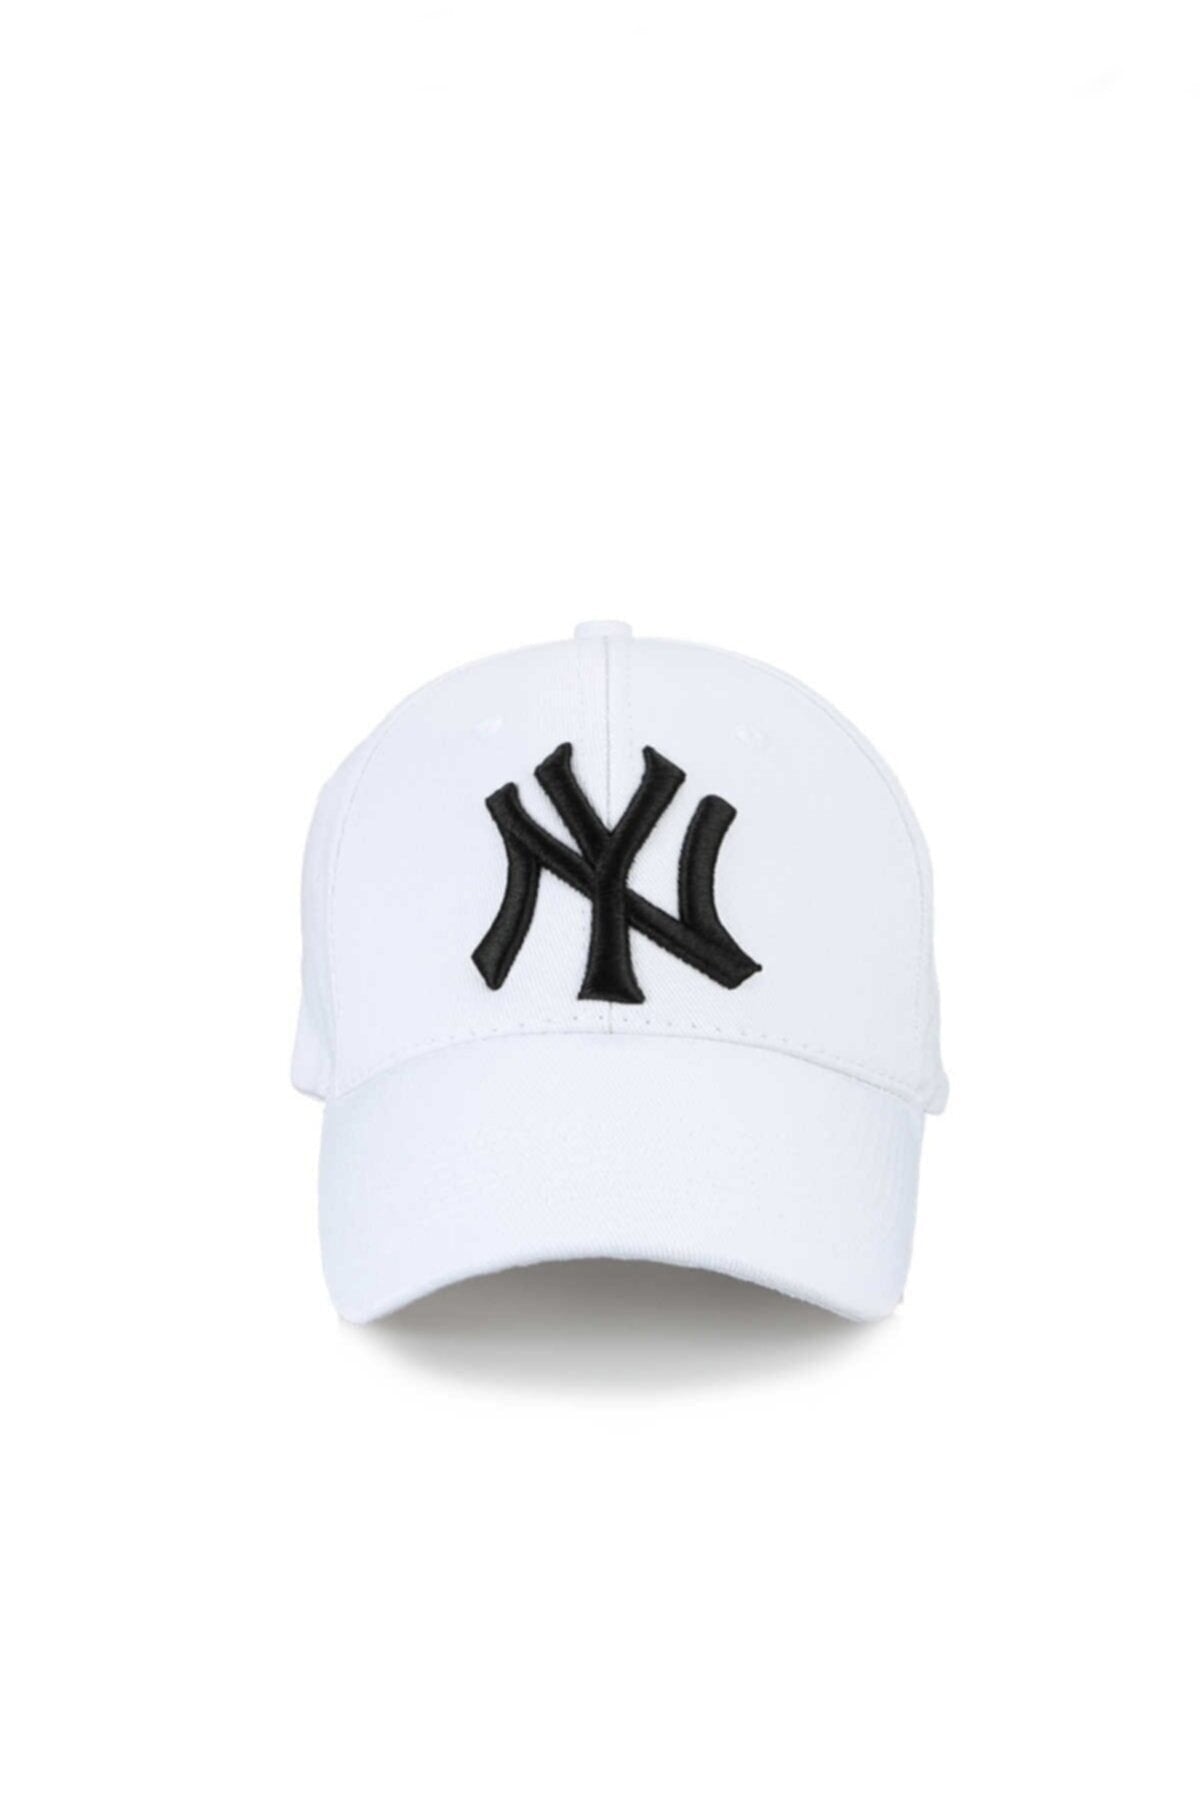 Ny New York 2 Pack Unisex Hat